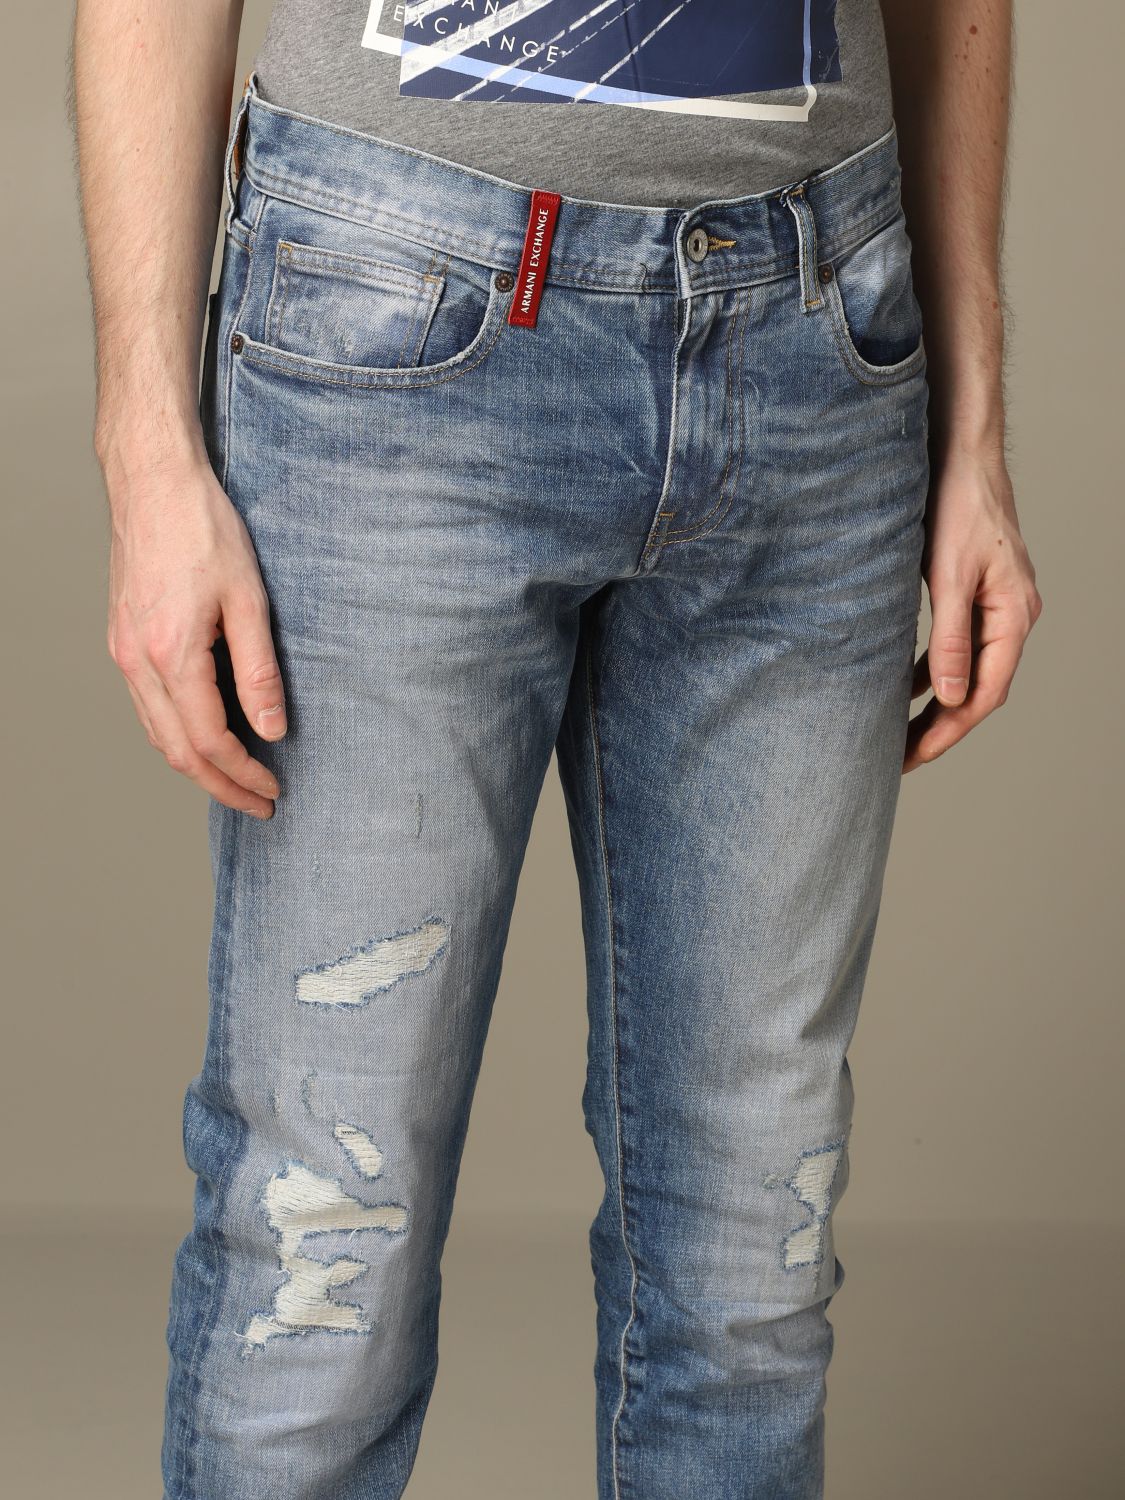 armani exchange jeans